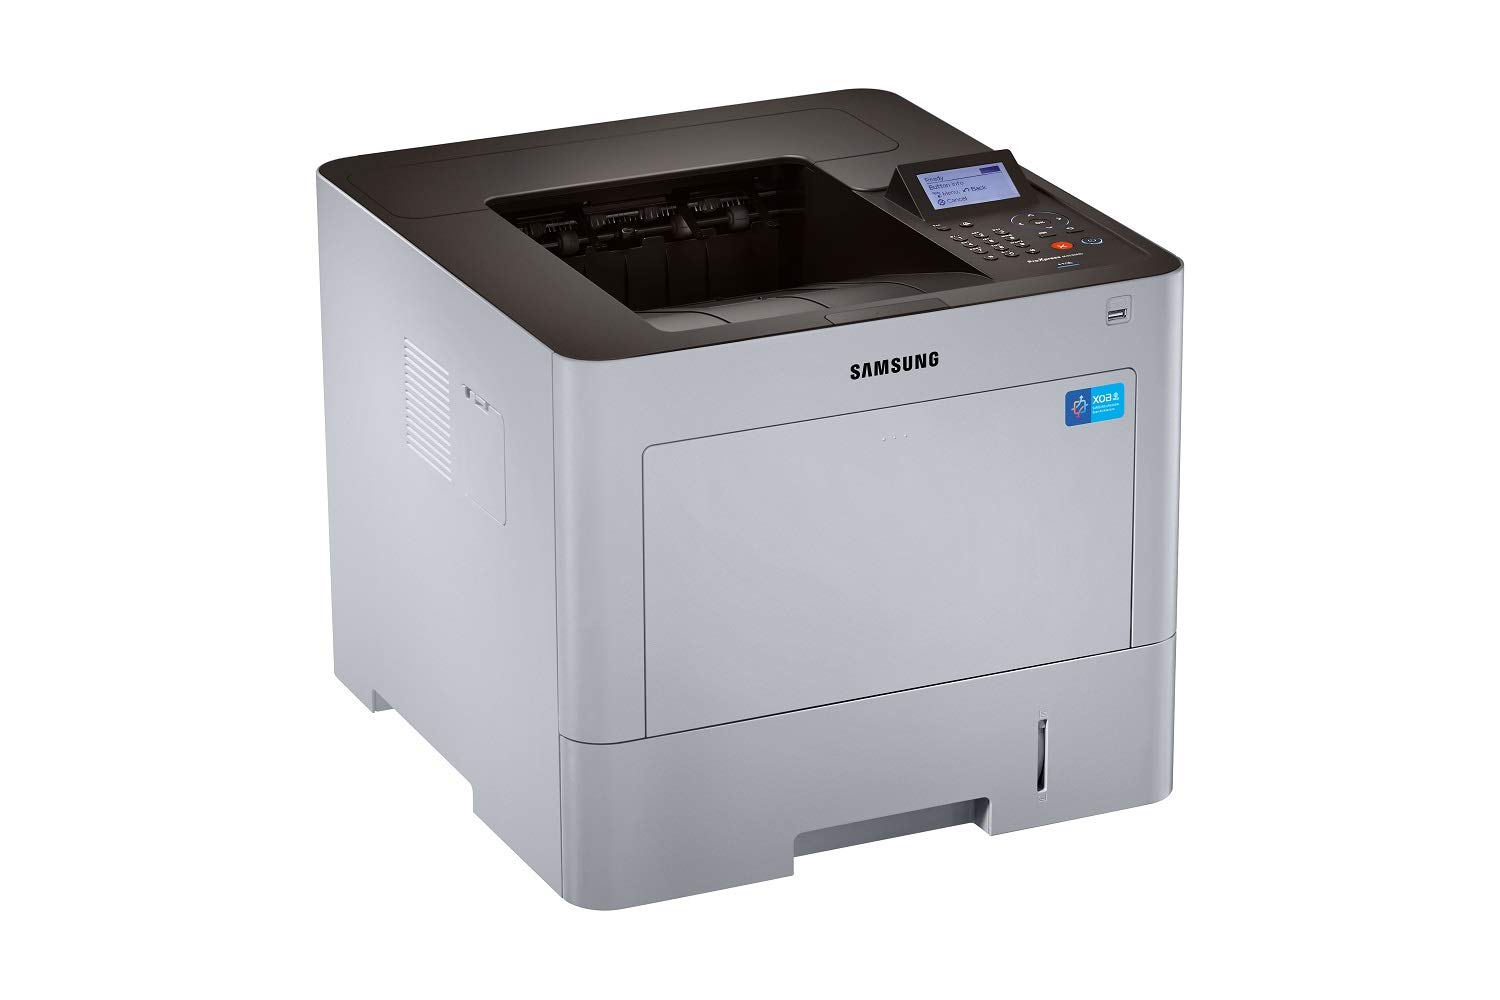 Samsung ProXpress SL-M4530 Laser Printer series